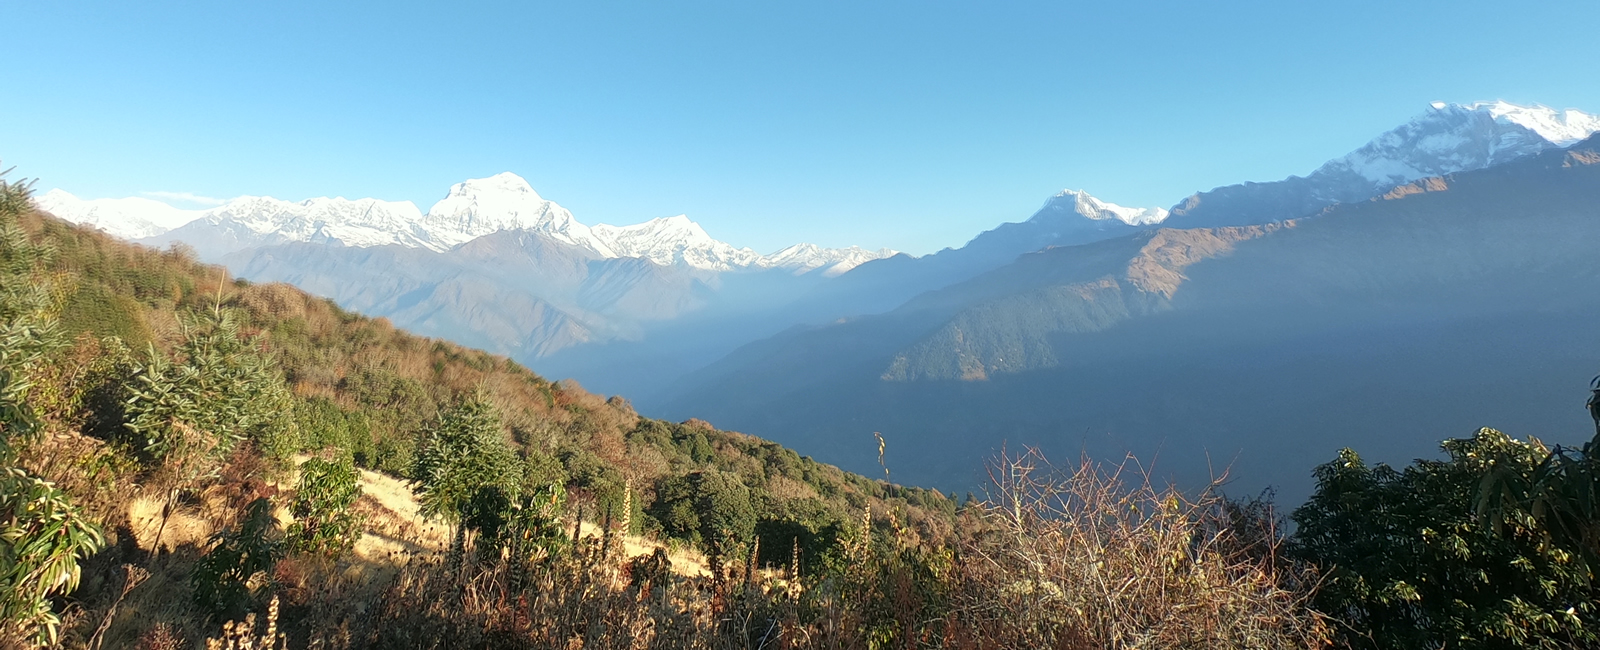 What makes annapurna base camp trek difficult?